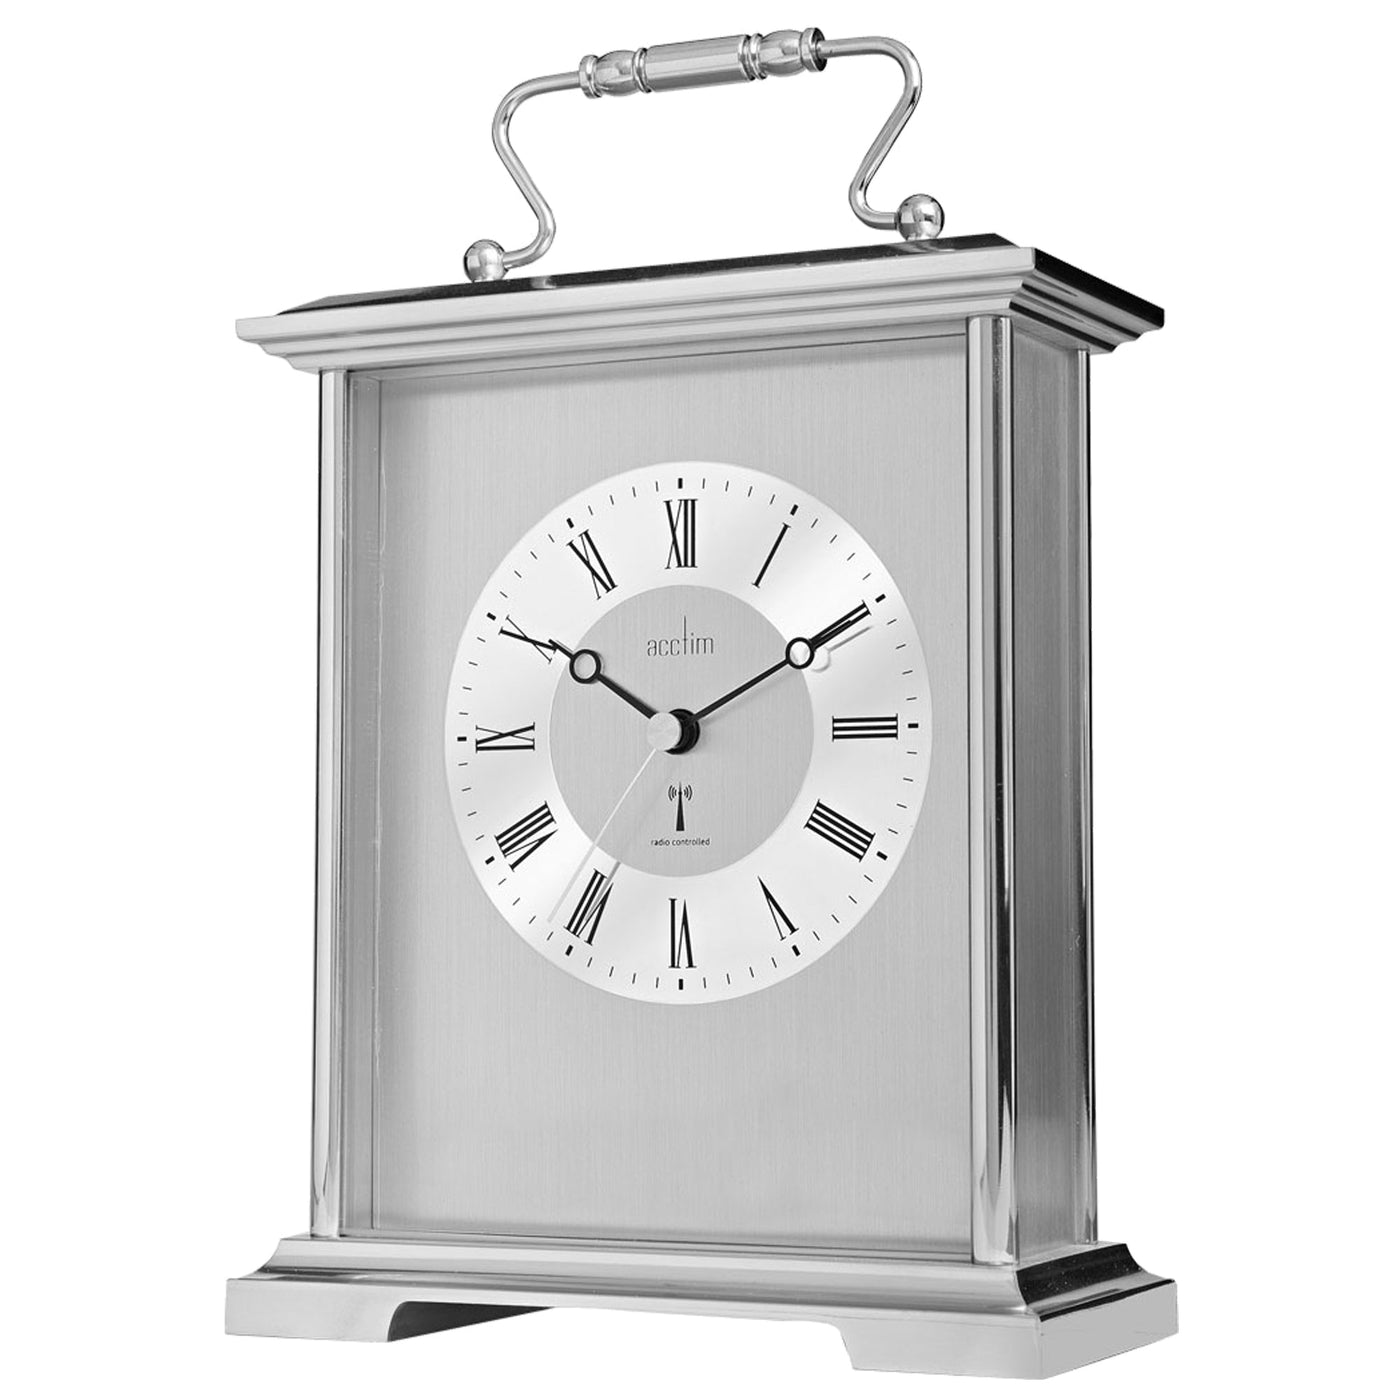 Acctim Althorp Radio Controlled Mantel Table Clock Brushed Chrome - timeframedclocks